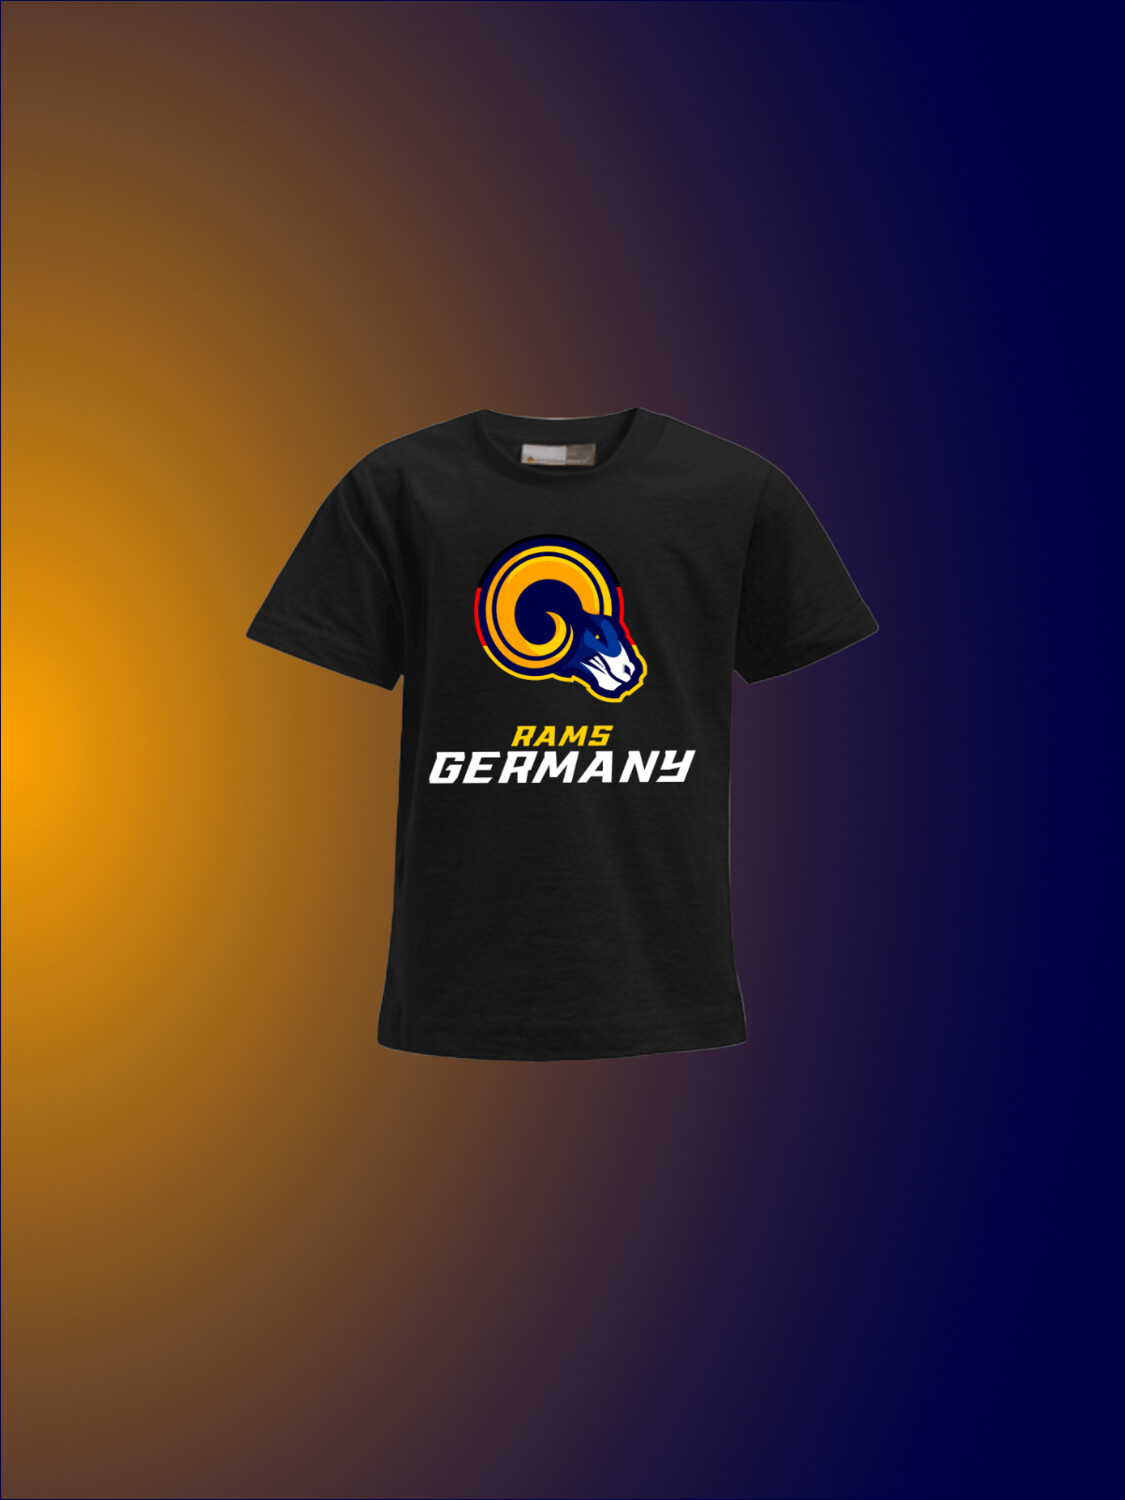 Rams Germany Kids T-Shirt 